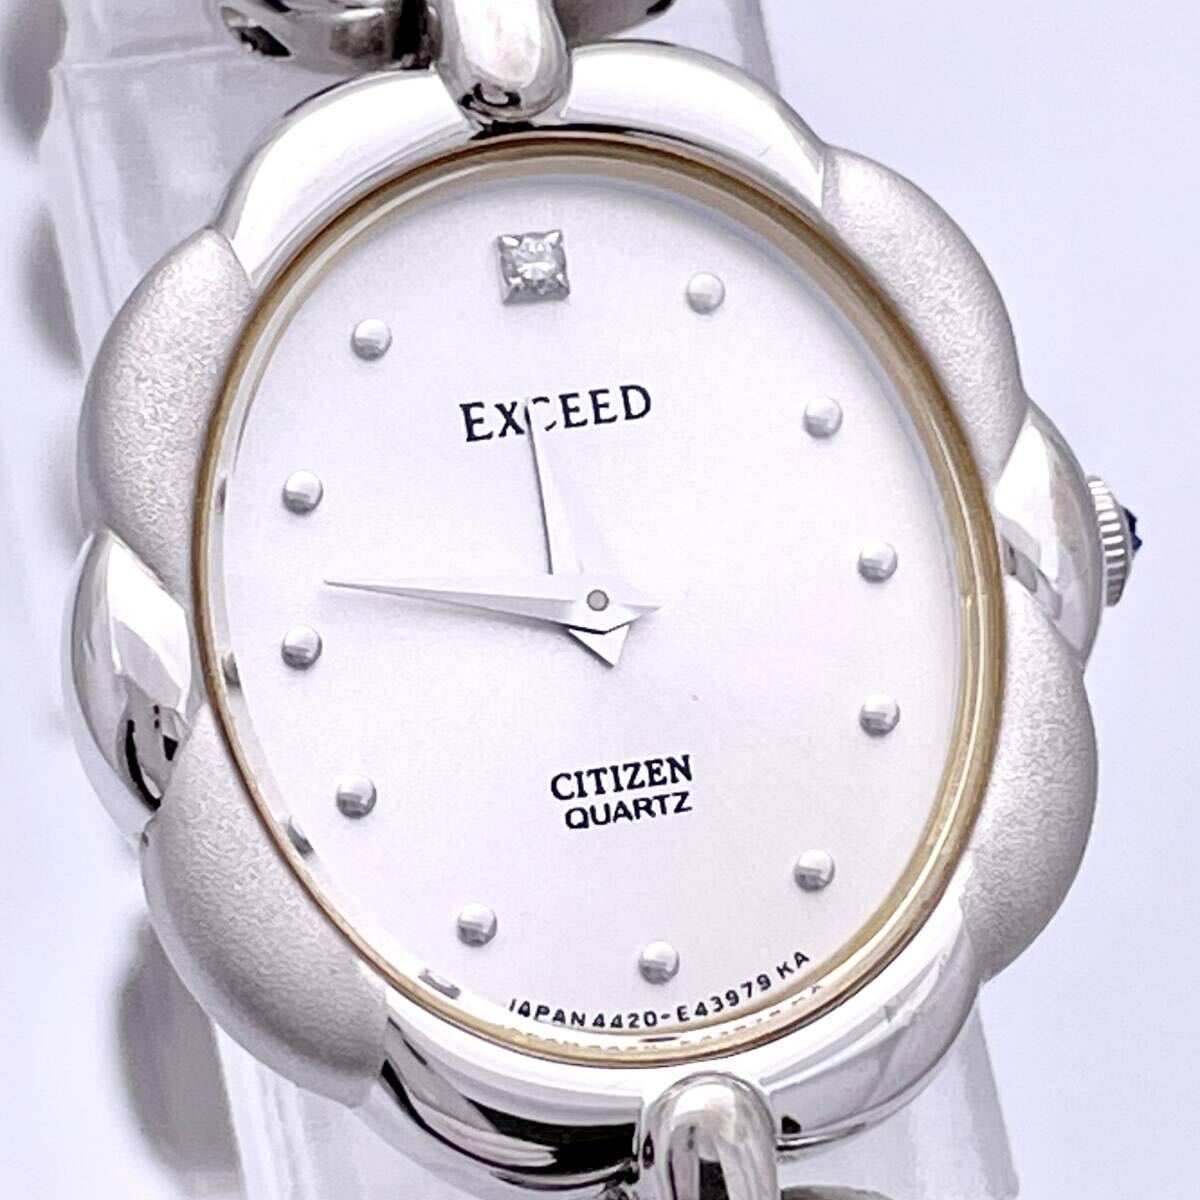 CITIZEN シチズン EXCEED エクシード 4420-E42193 腕時計 ウォッチ クォーツ quartz シルバー文字盤 銀 シルバー P159_画像4